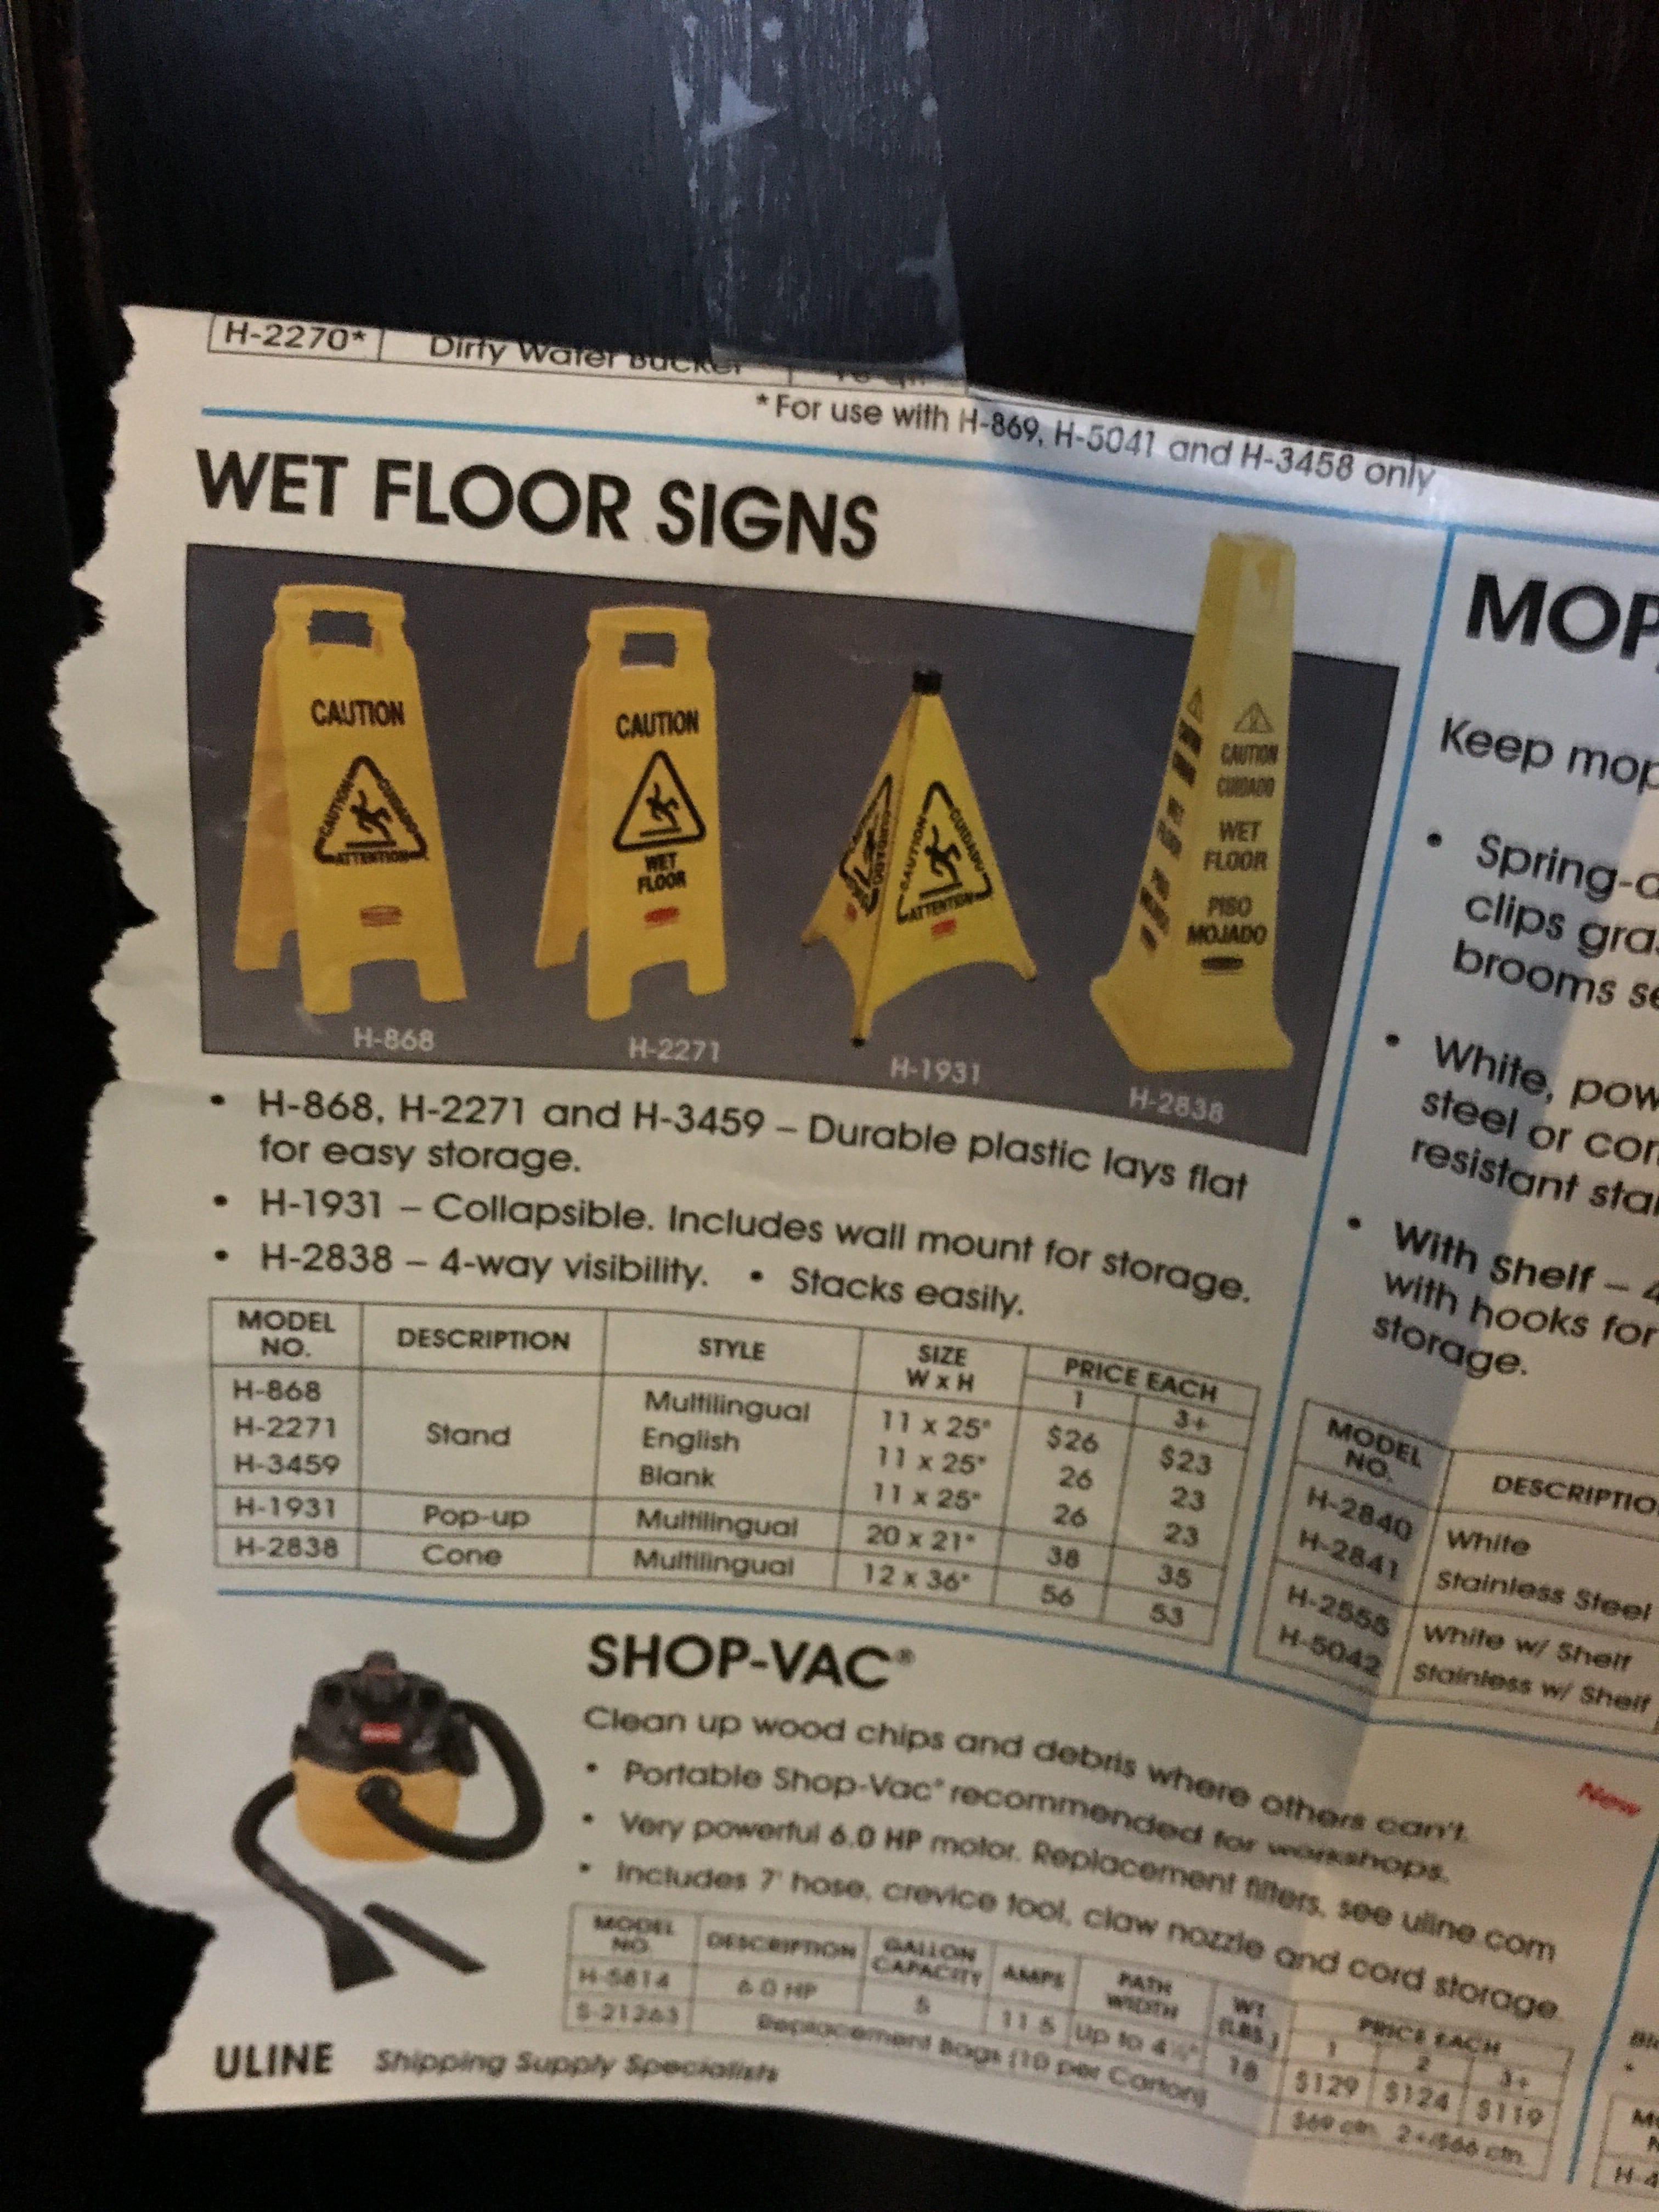 The Hidden Meaning In Wet Floor Signs John Essex Medium